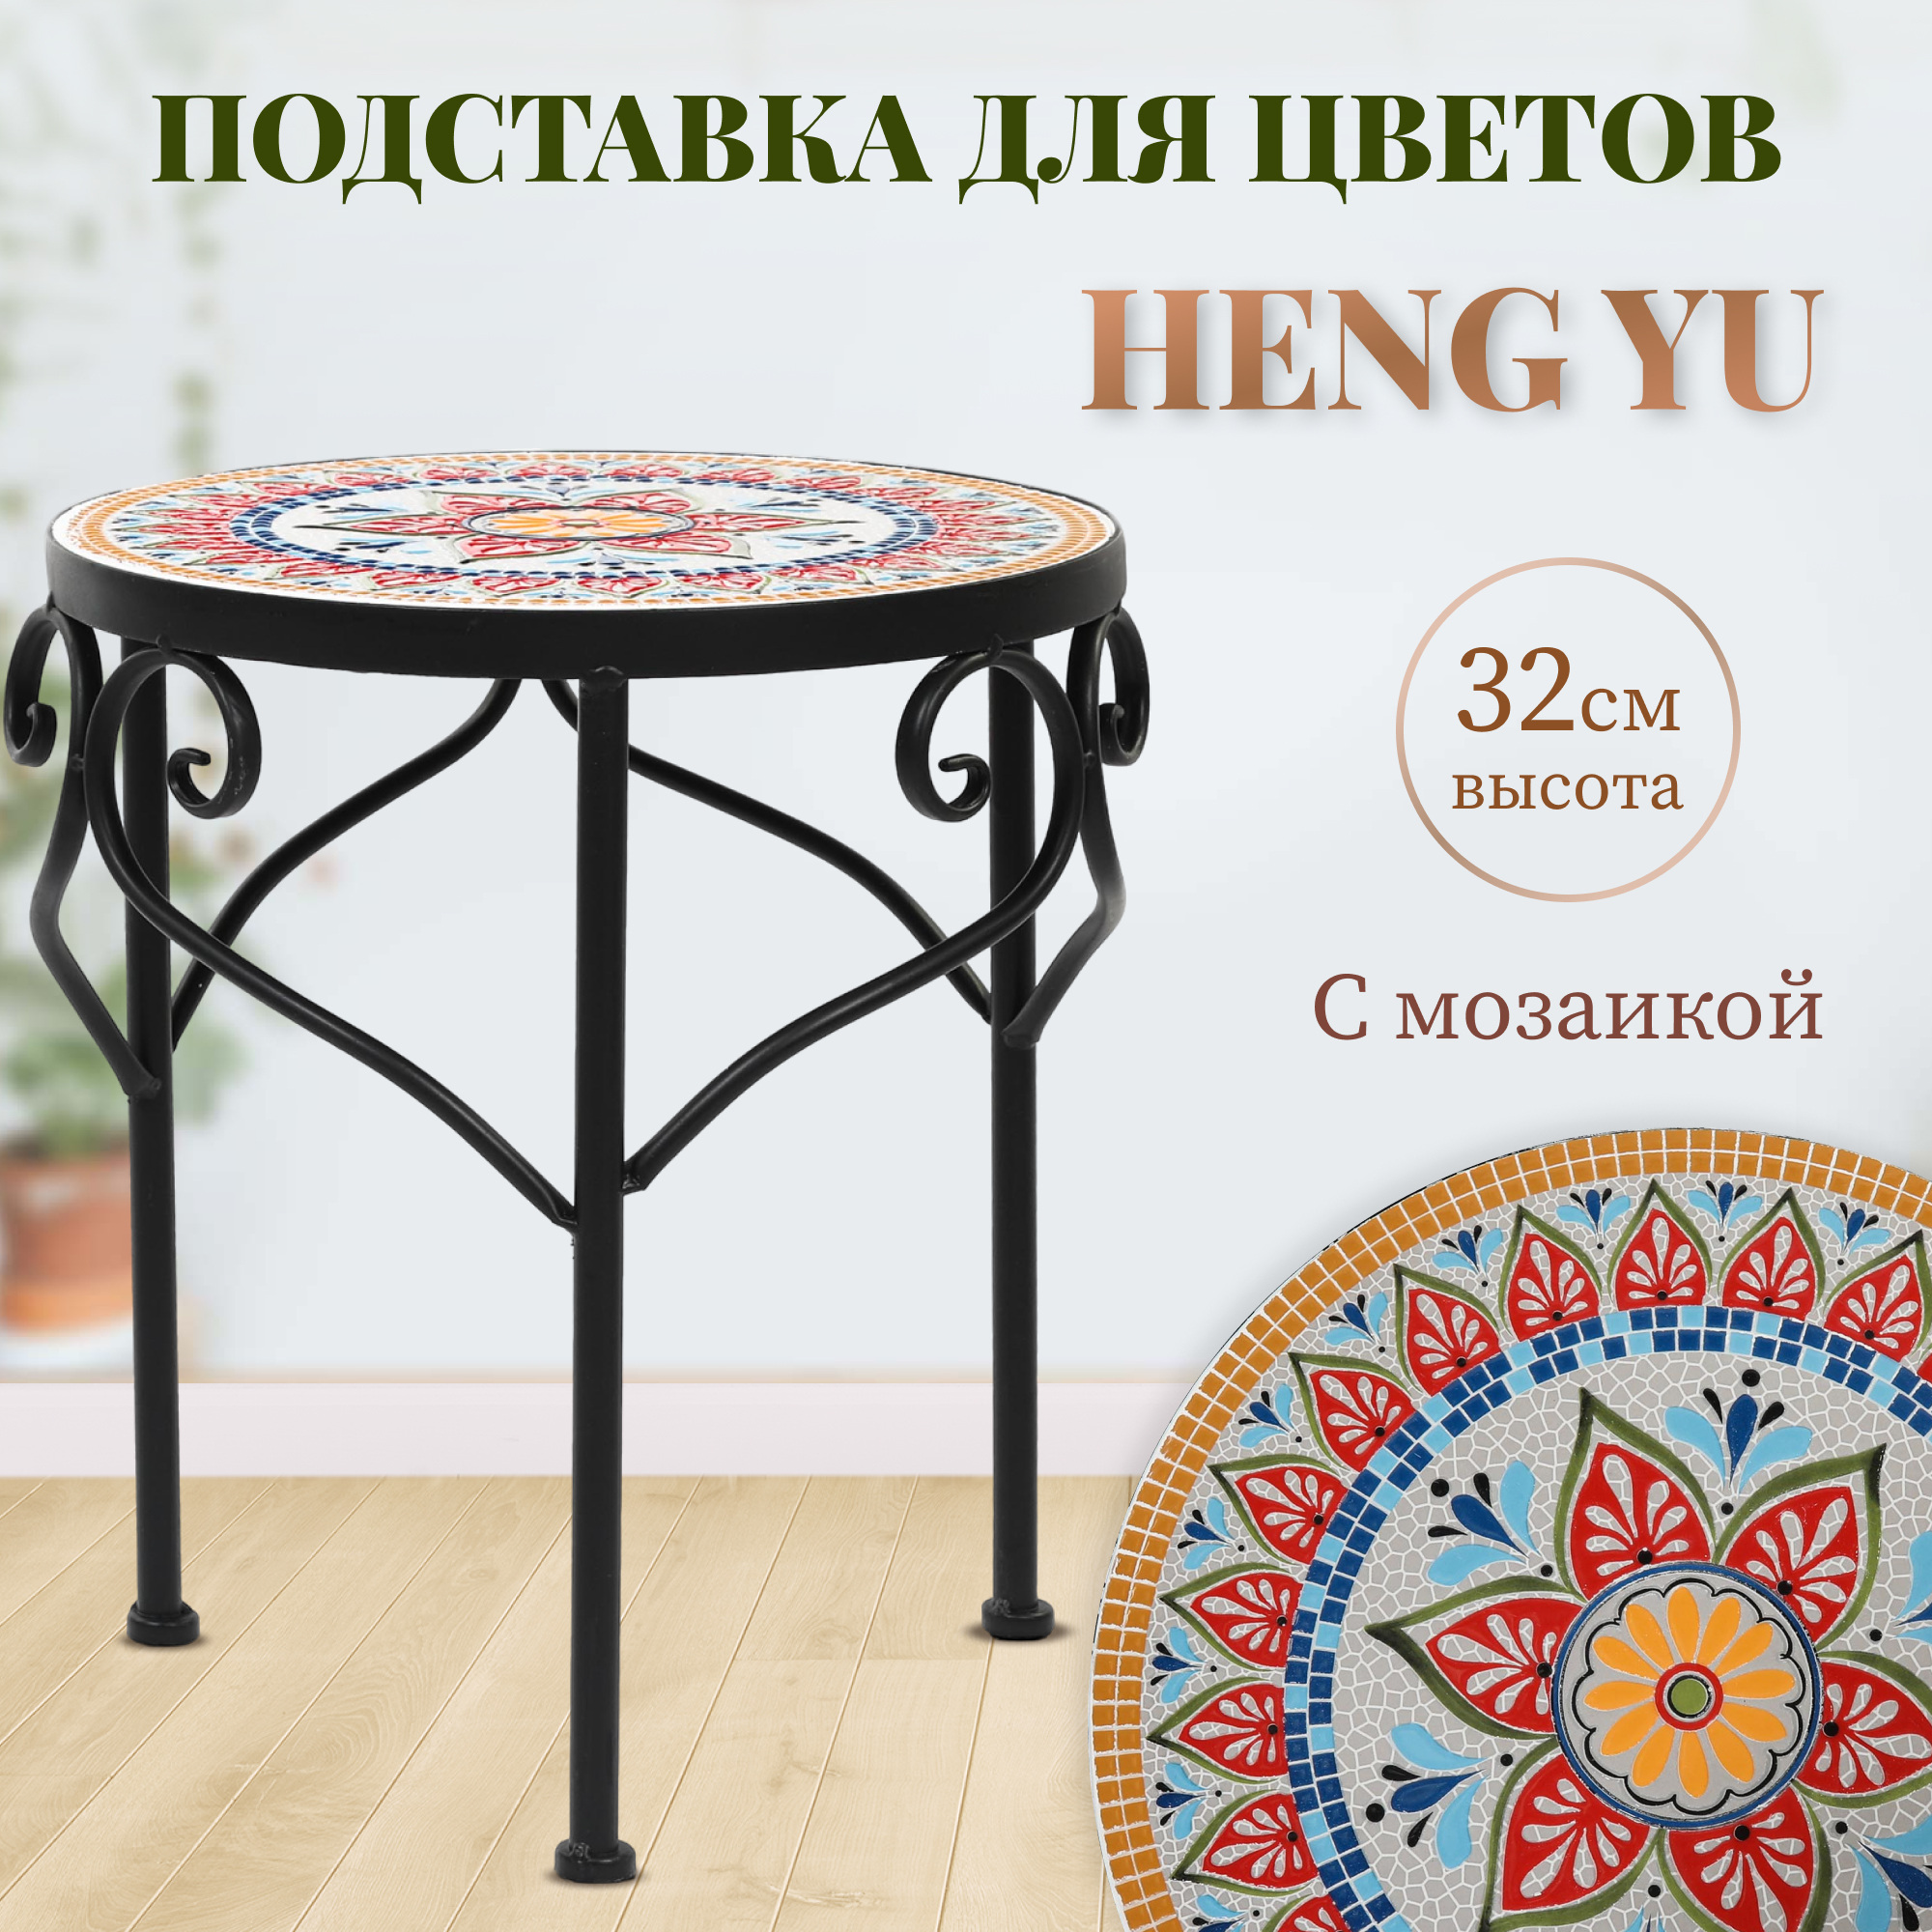 фото Подставка для цветов heng yu с мозаикой мексика 25х25х32 см